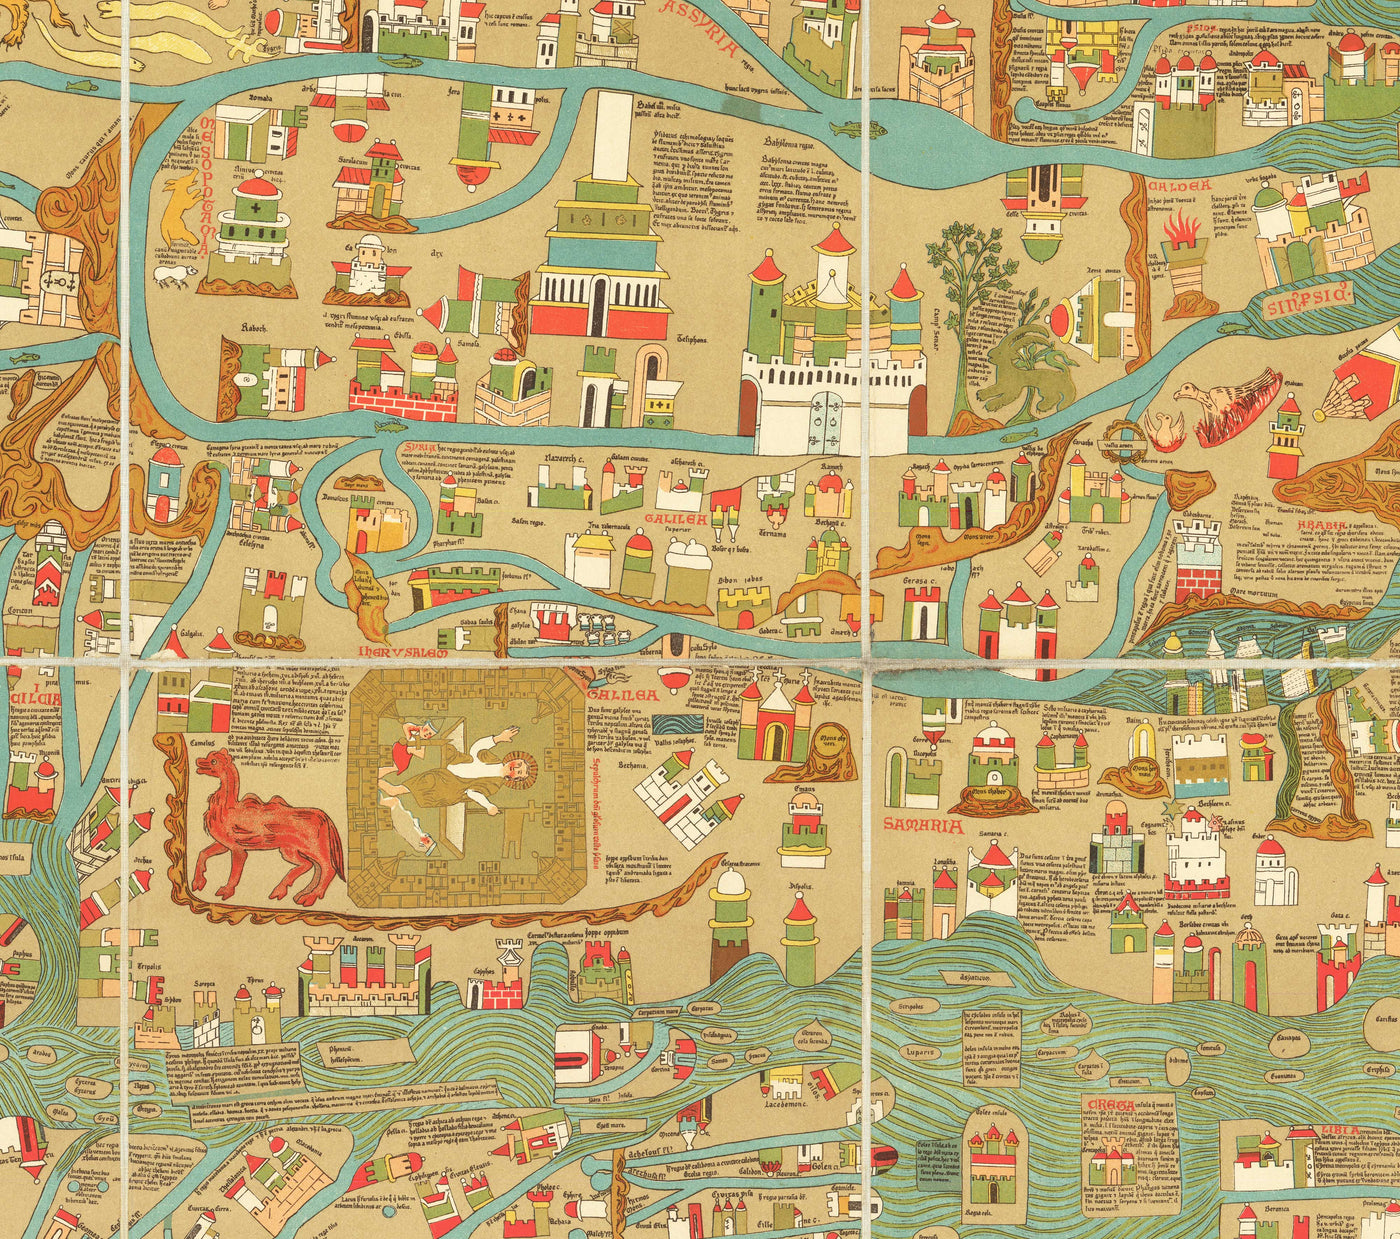 Alte Ebstorfer Mappa Mundi – Alter Weltatlas aus dem 13. Jahrhundert – Gibraltar, Mittelmeer, Jerusalem, Sizilien, Griechenland